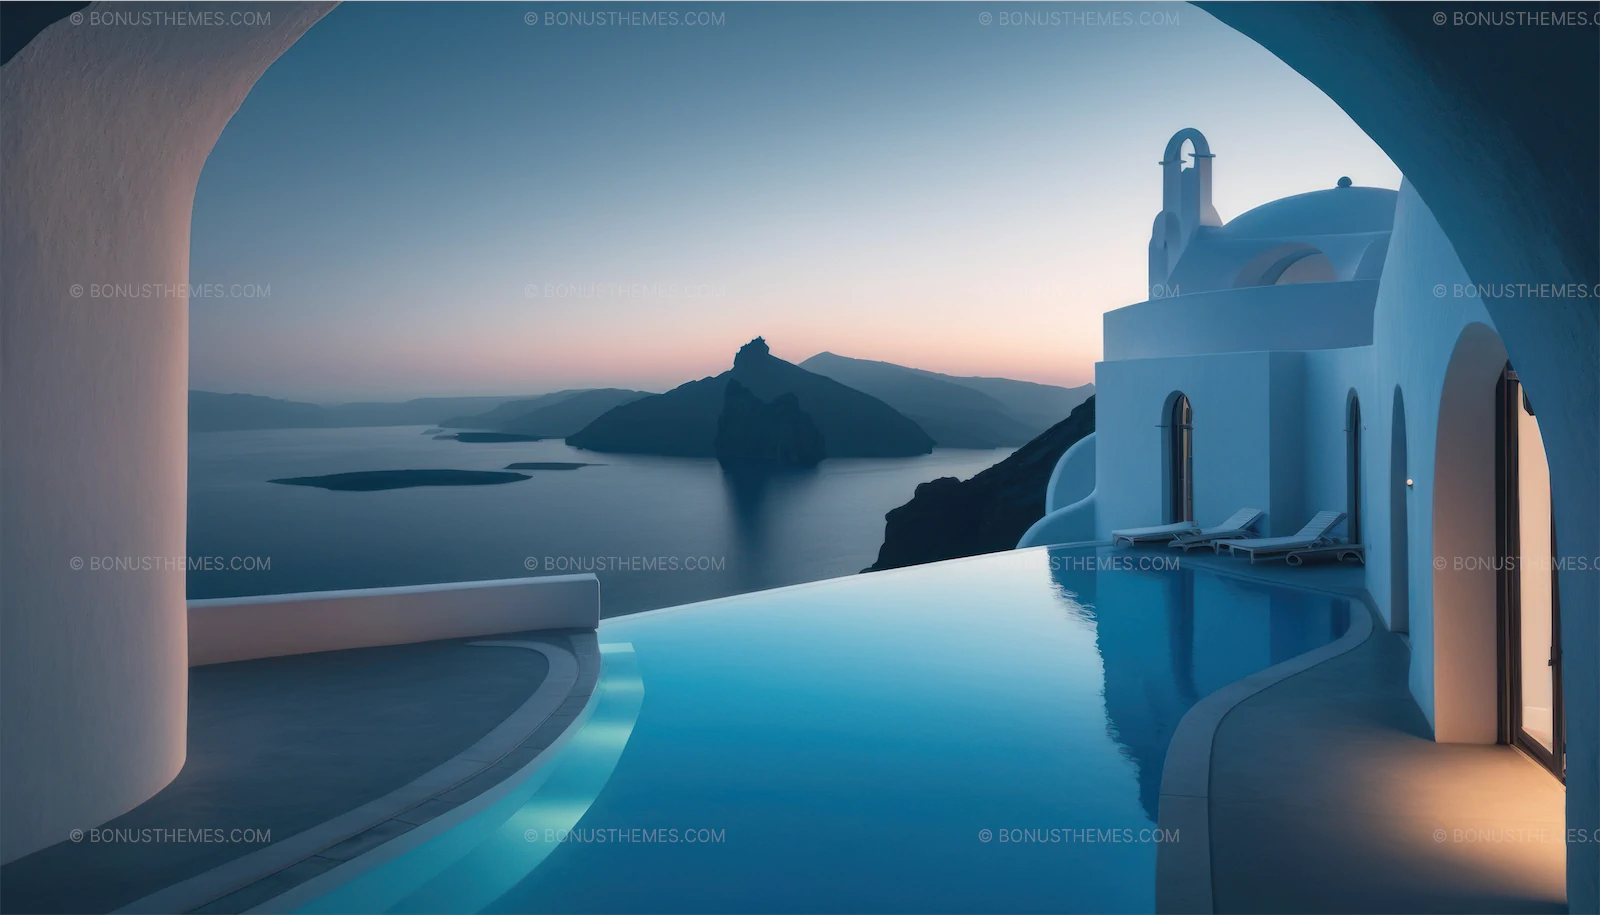 Cycladic architectural villa with illuminated swimming pool on Santorini island